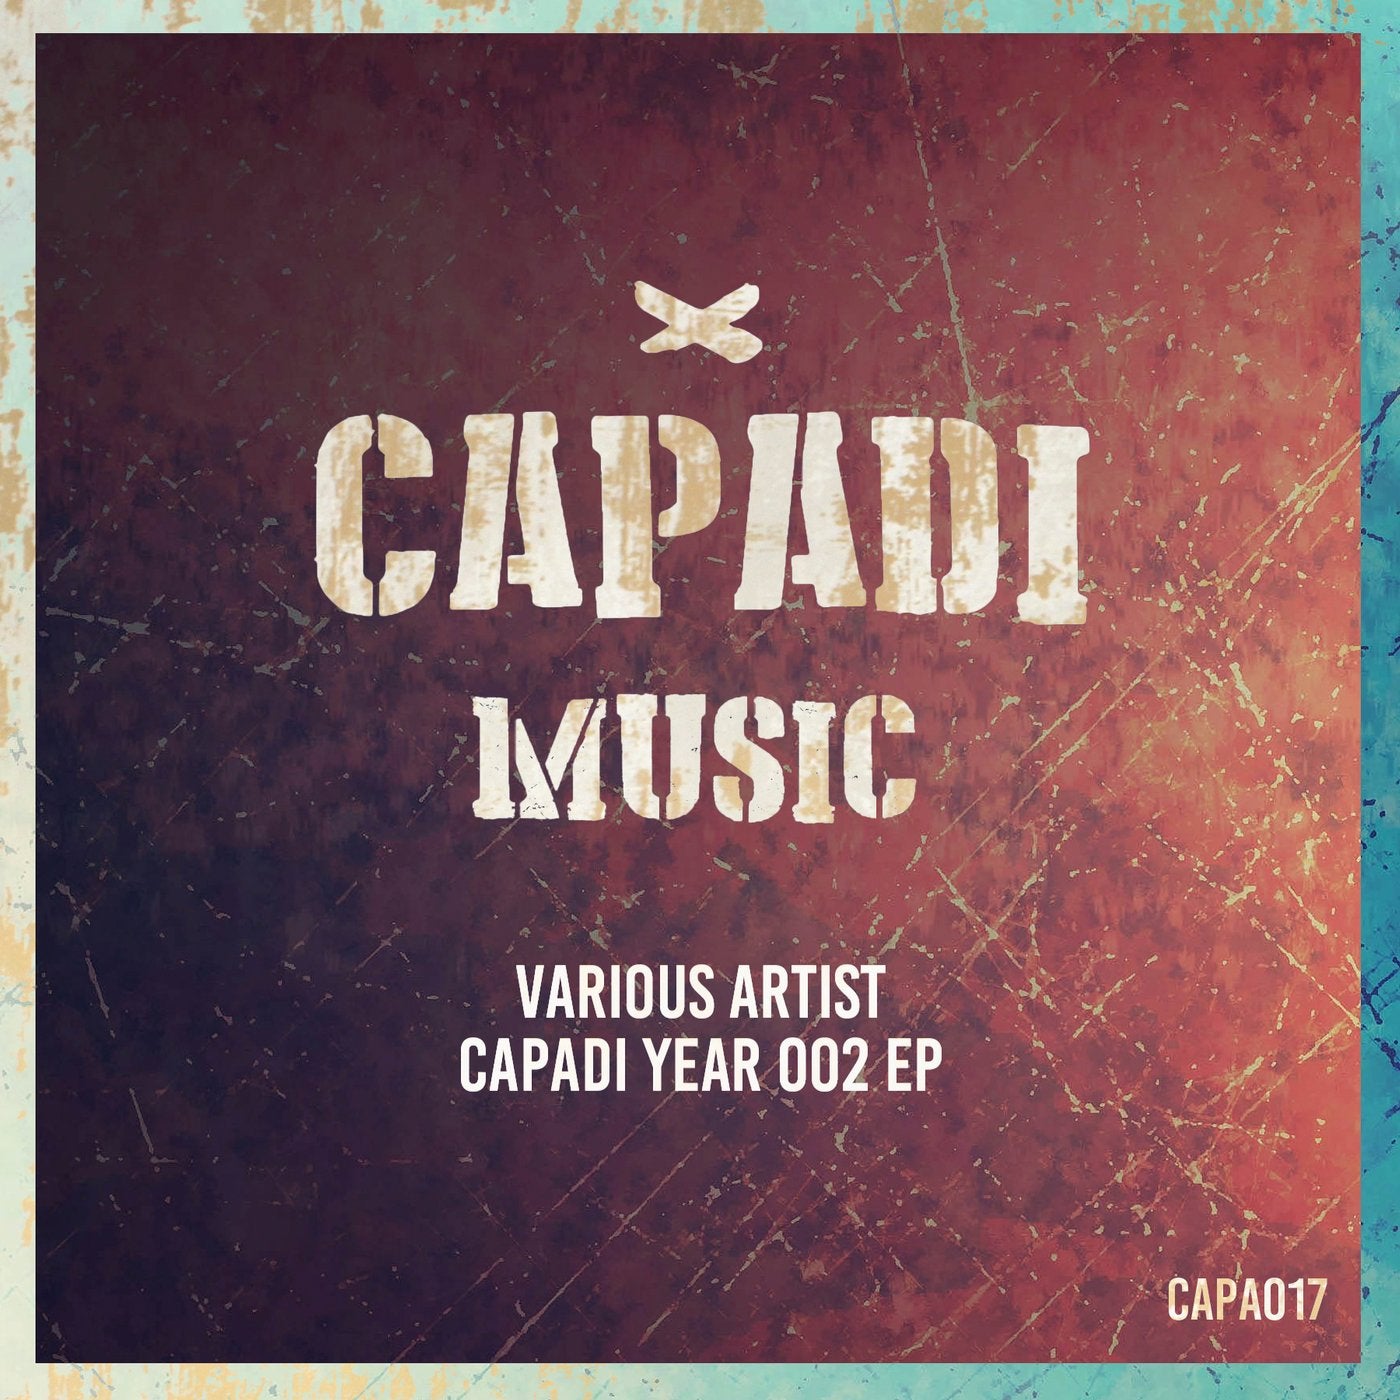 Capadi Year 002 EP